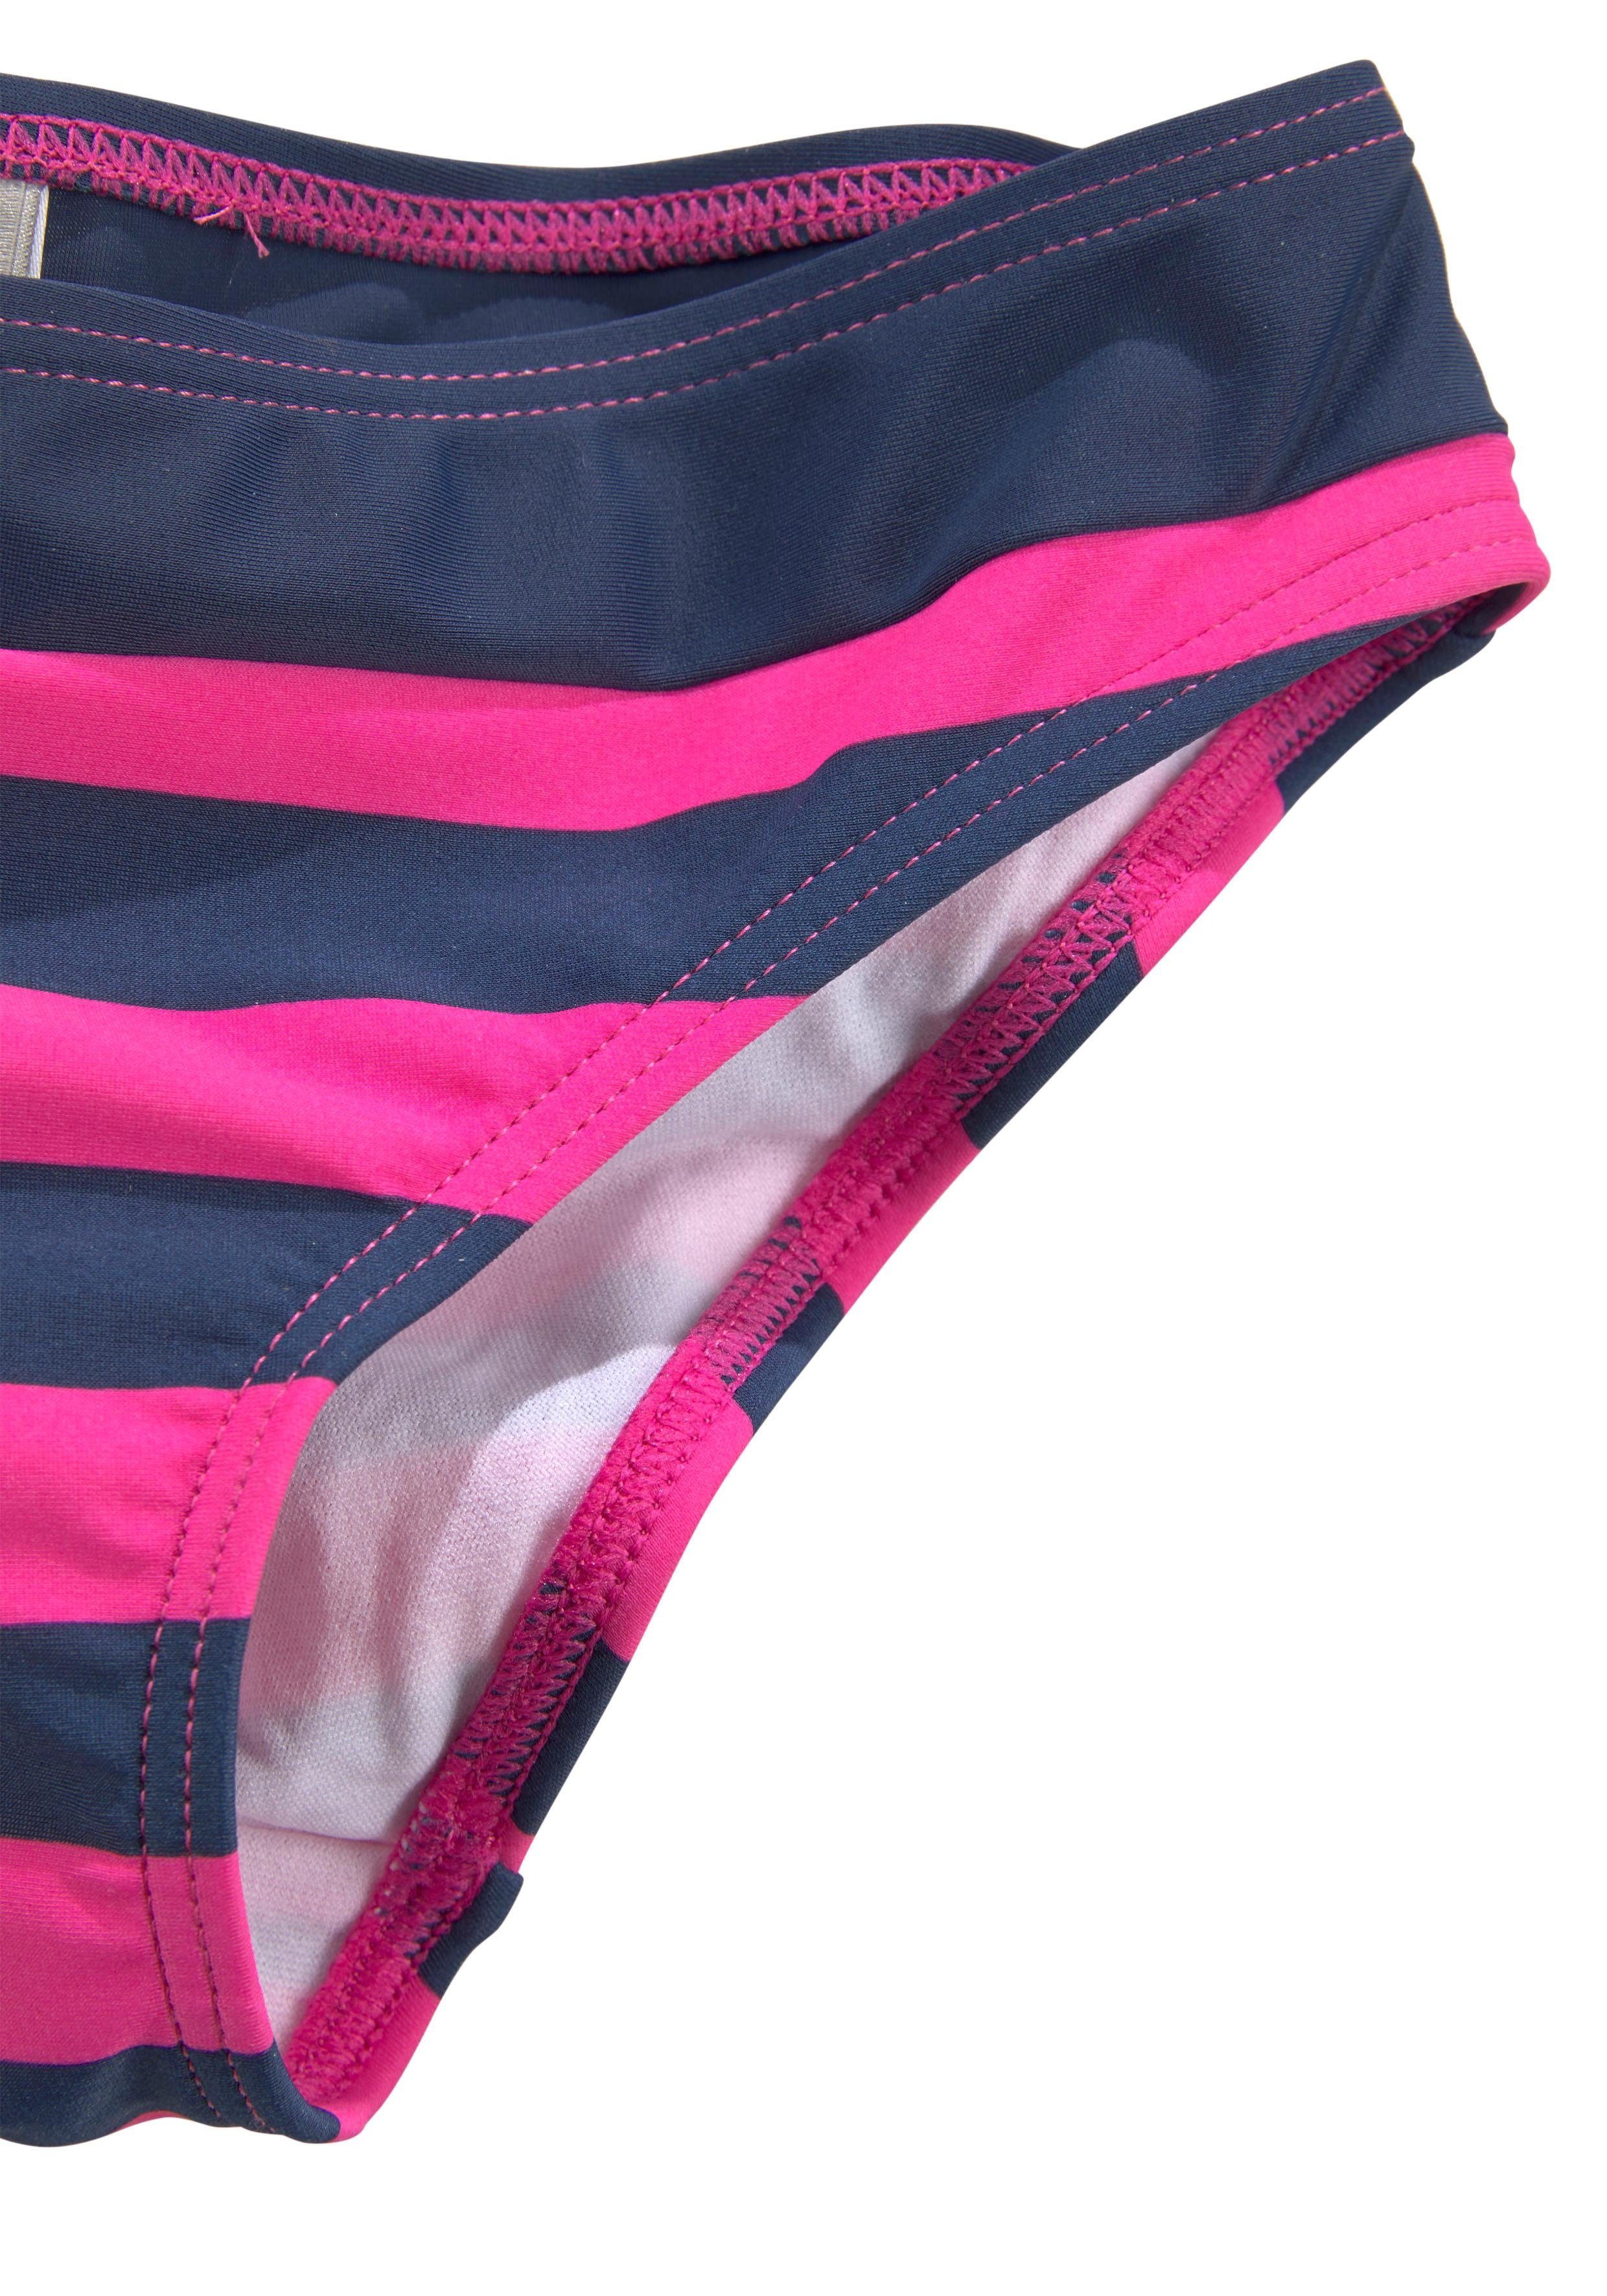 pink-marine Logoprint Bandeau-Bikini mit Bench. großem